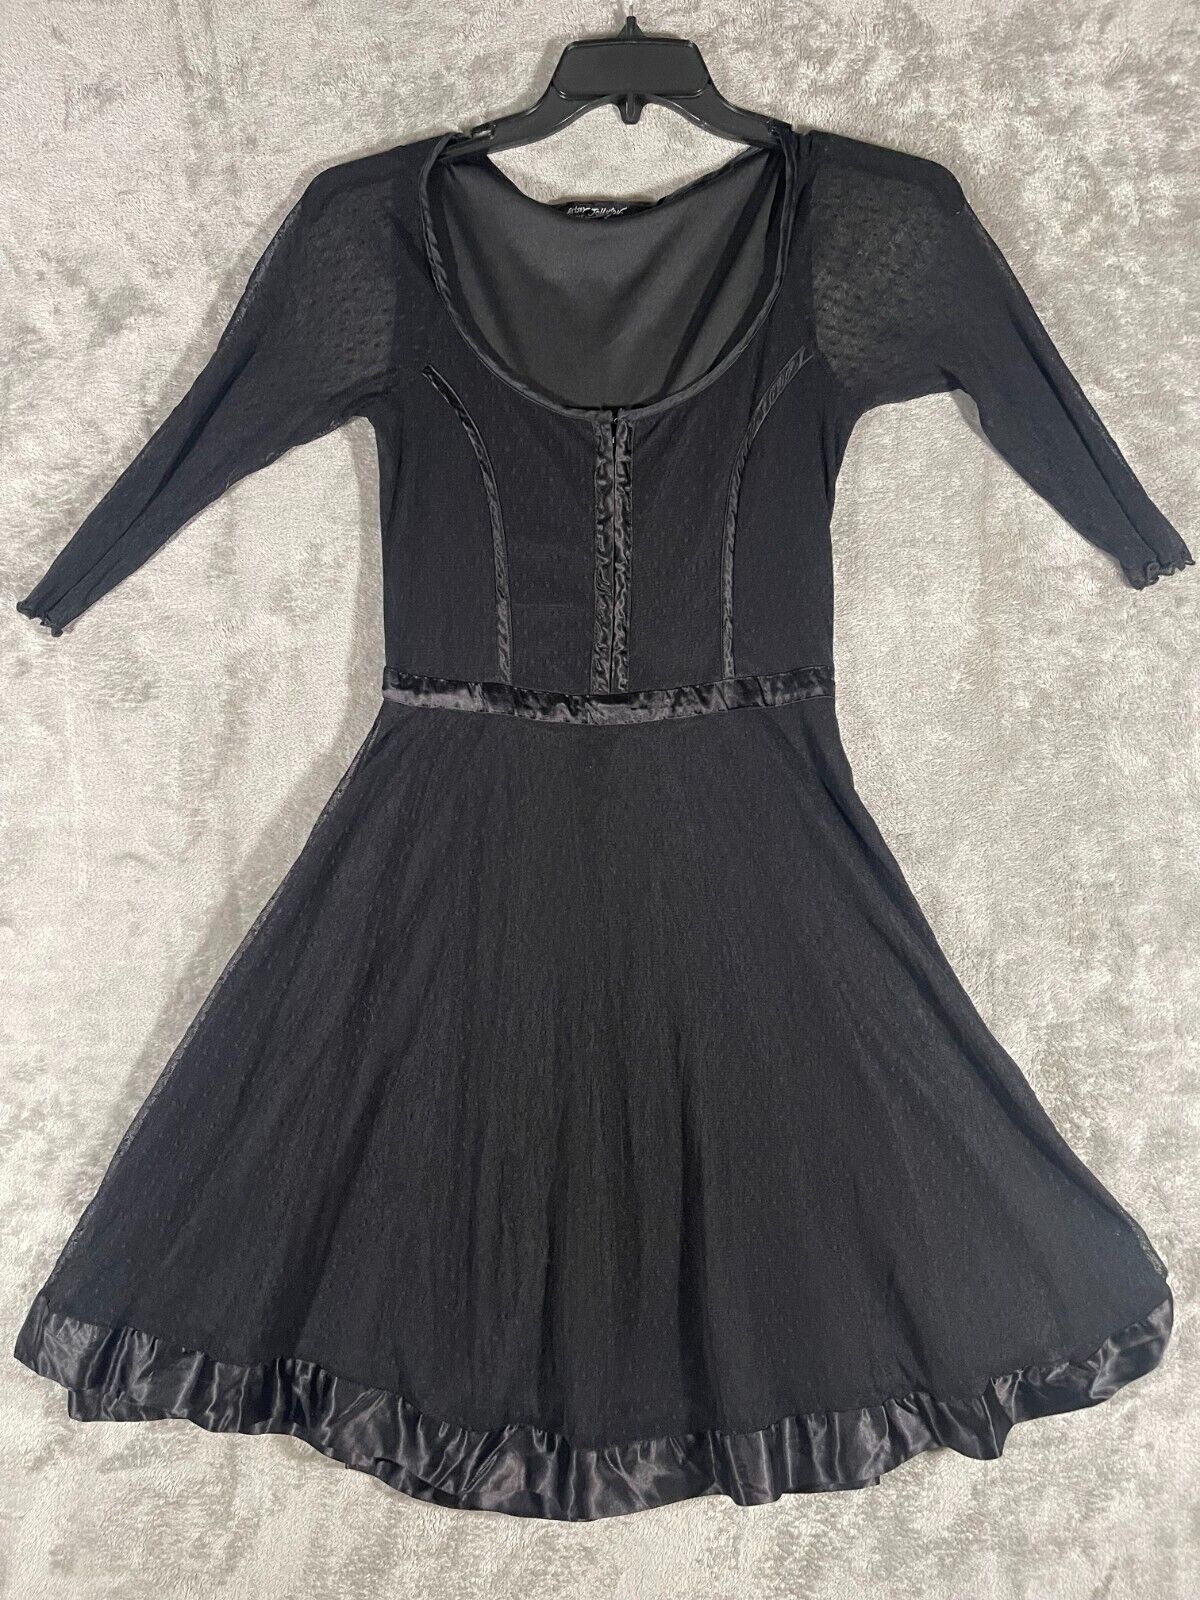 Vintage Betsy Johnson Black Dress Size S Sheer Sleeves Skirt Hook Eye Front